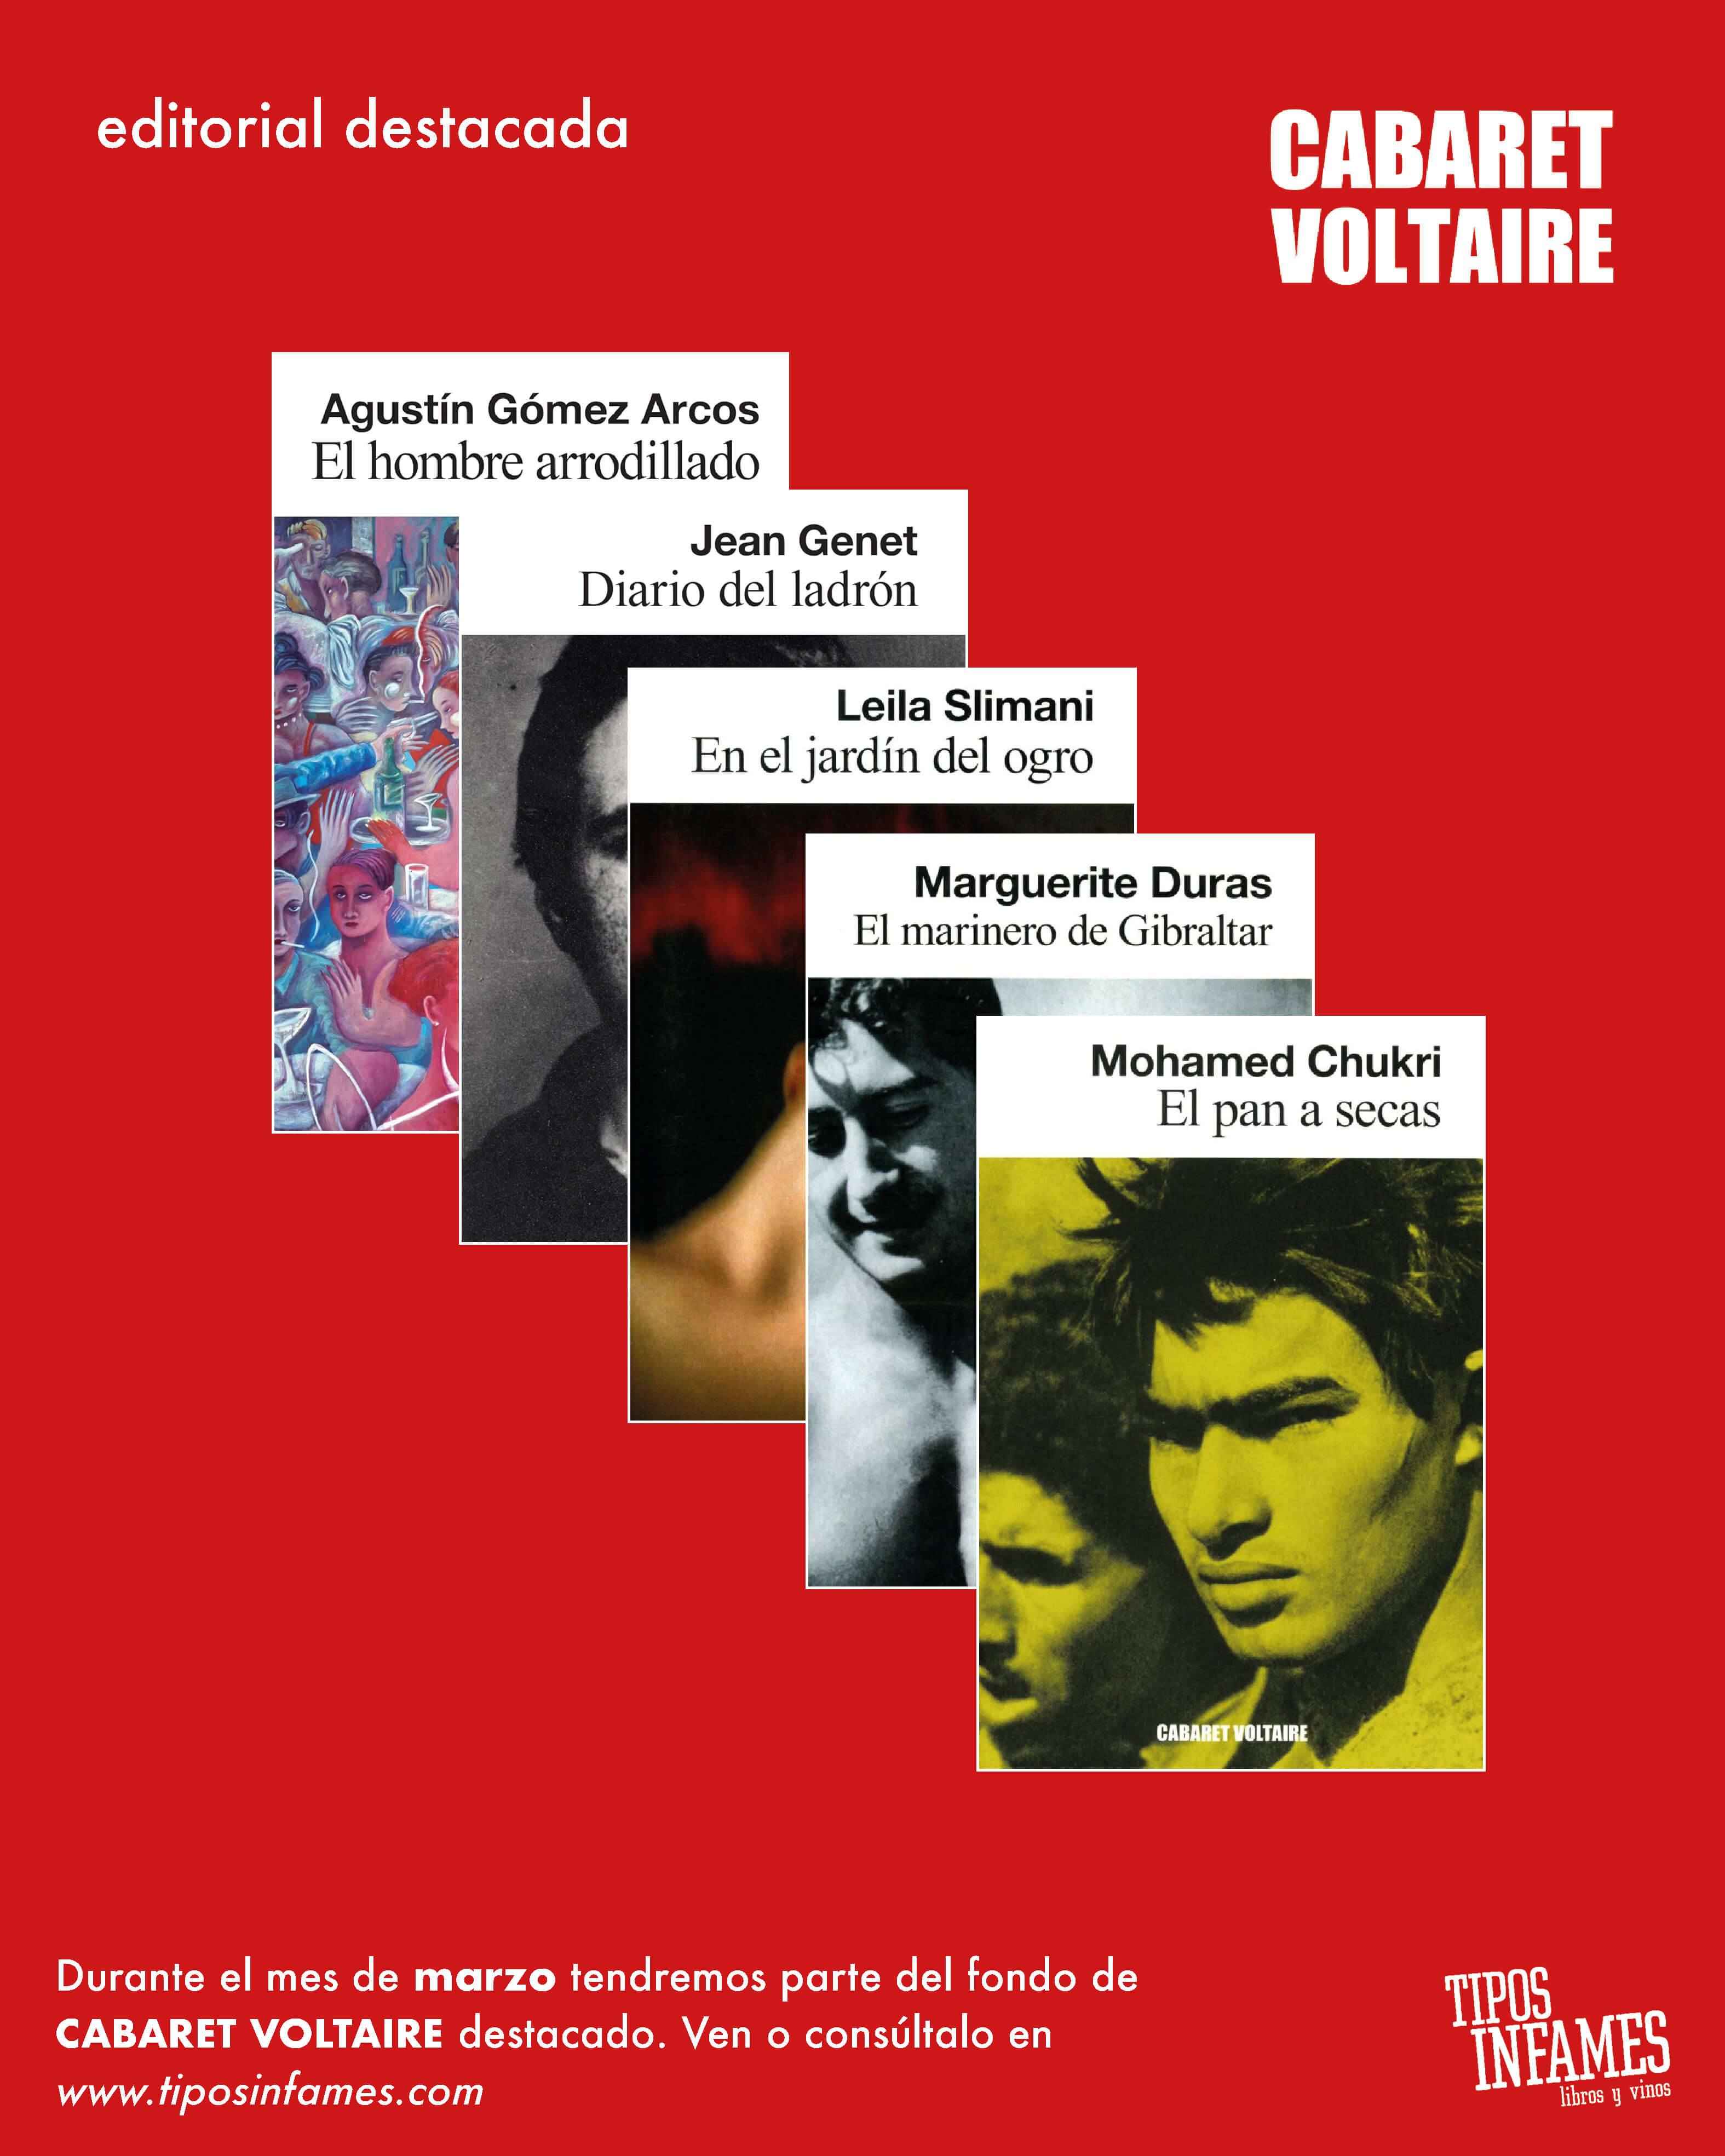 Cabaret Voltaire, editorial destacada del mes